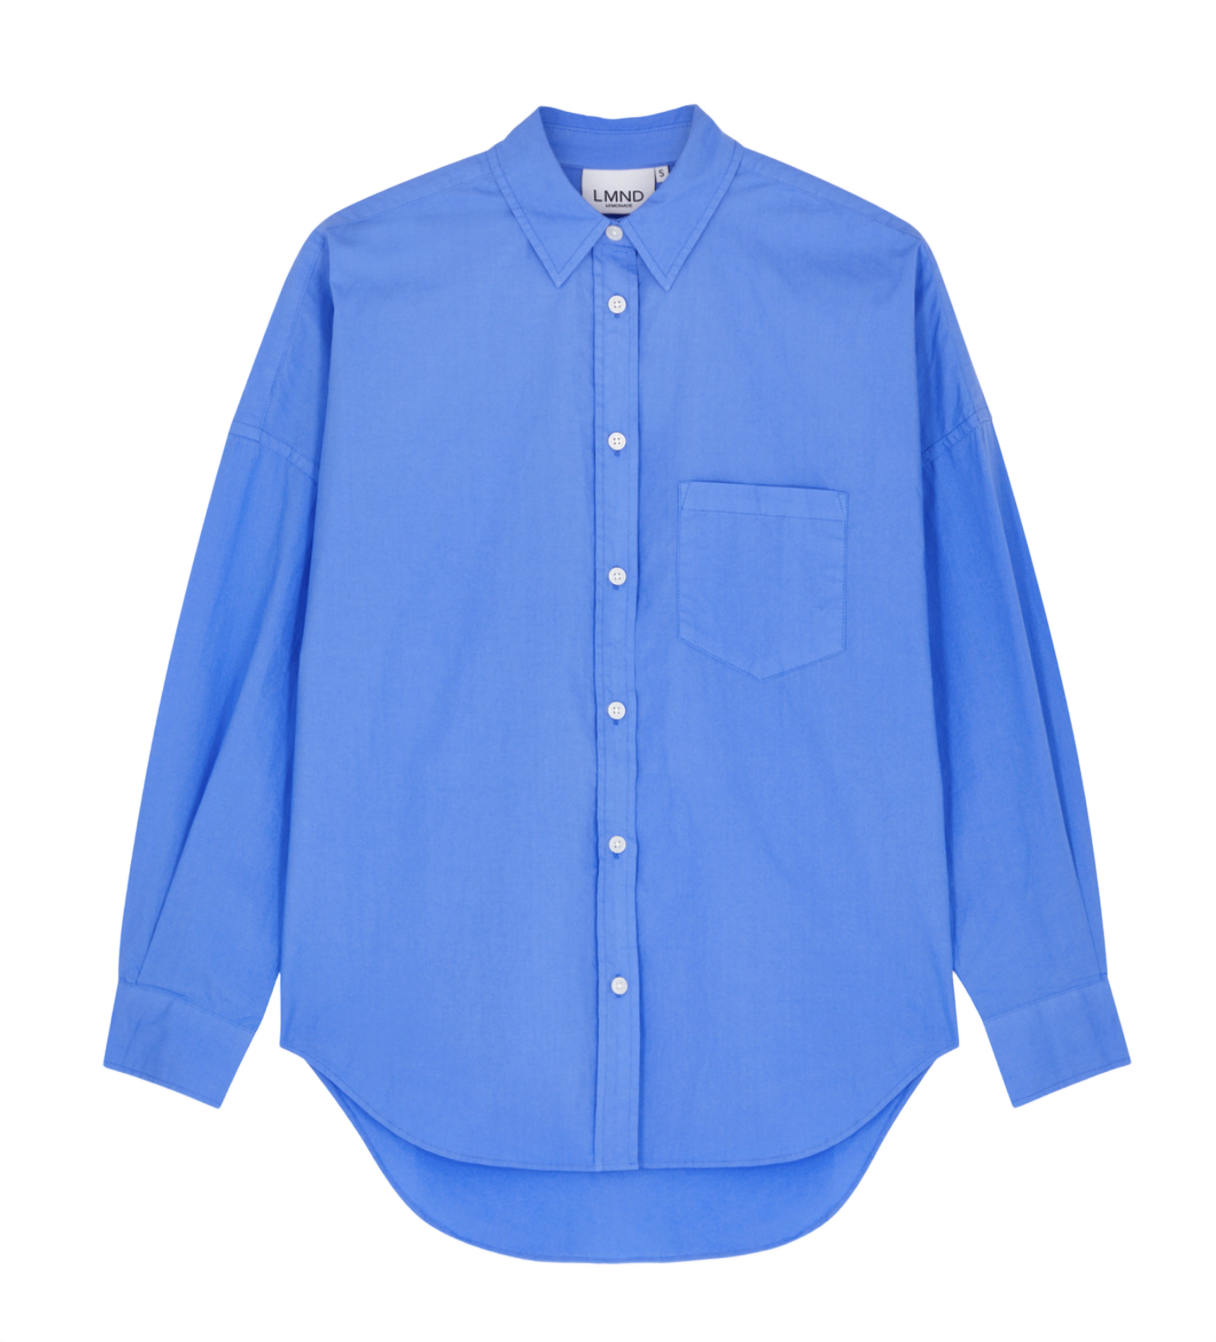 The Chiara Shirt Ink Blue